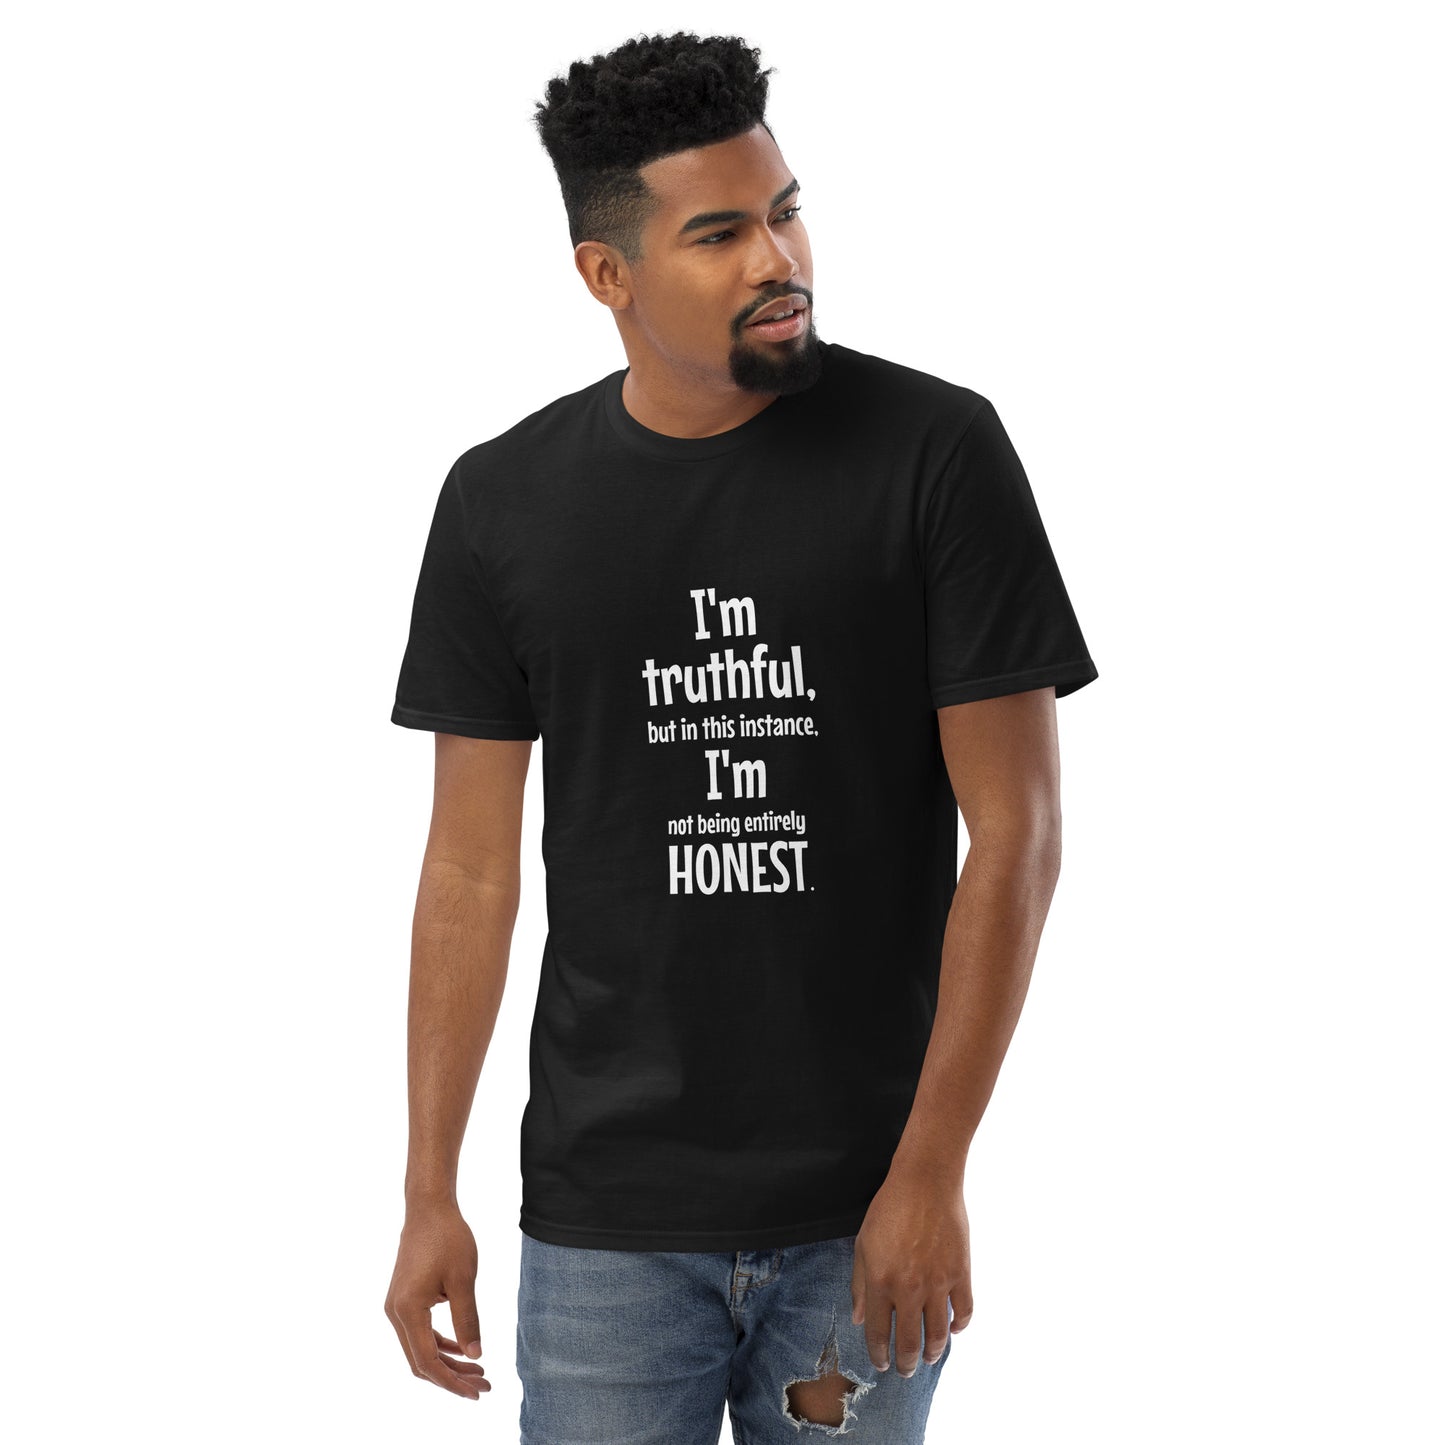 I'm truthful, I'm honest - Men's T-Shirt